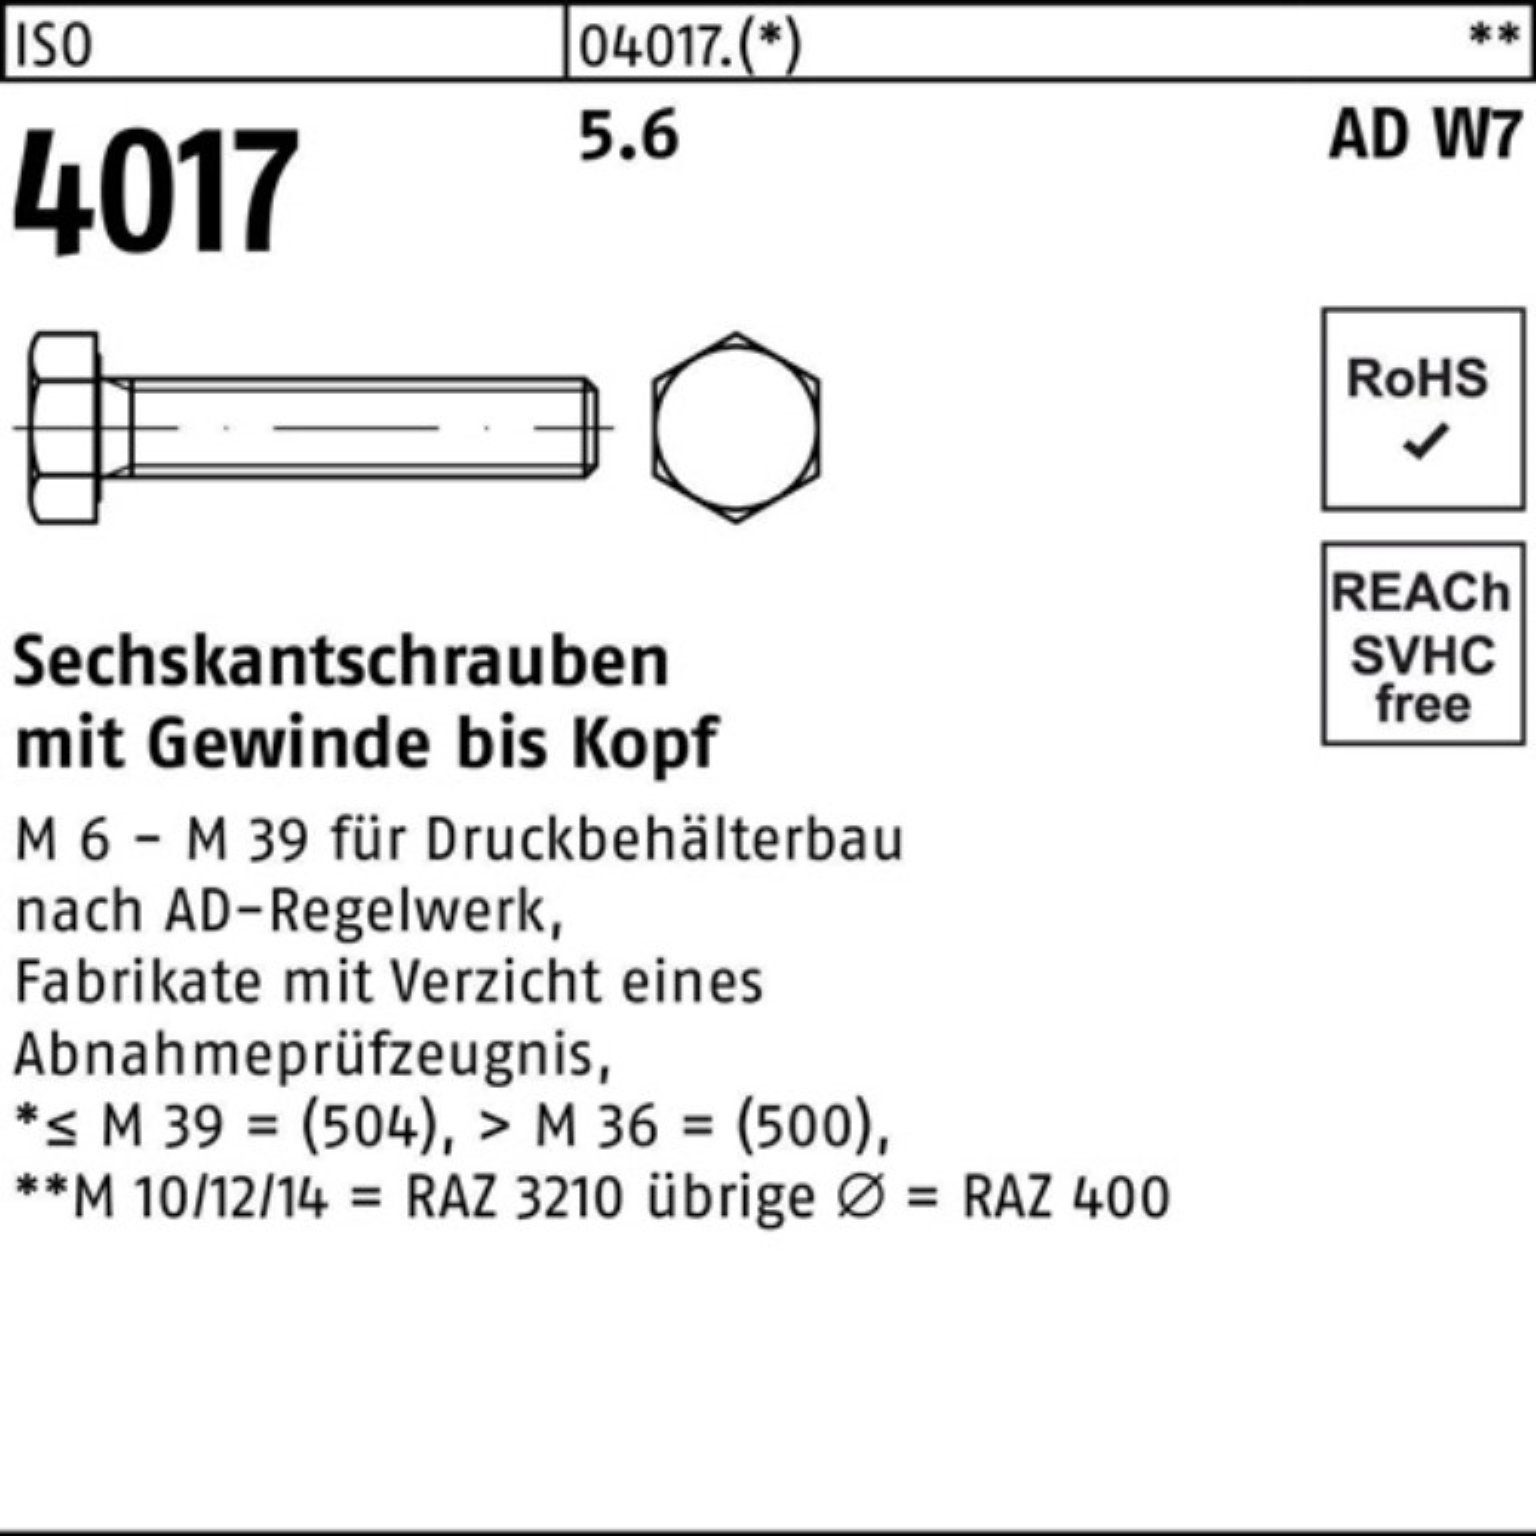 Sechskantschraube M20x 140 VG 4017 Stück AD 25 5.6 W7 ISO Sechskantschraube 100er Bufab Pack